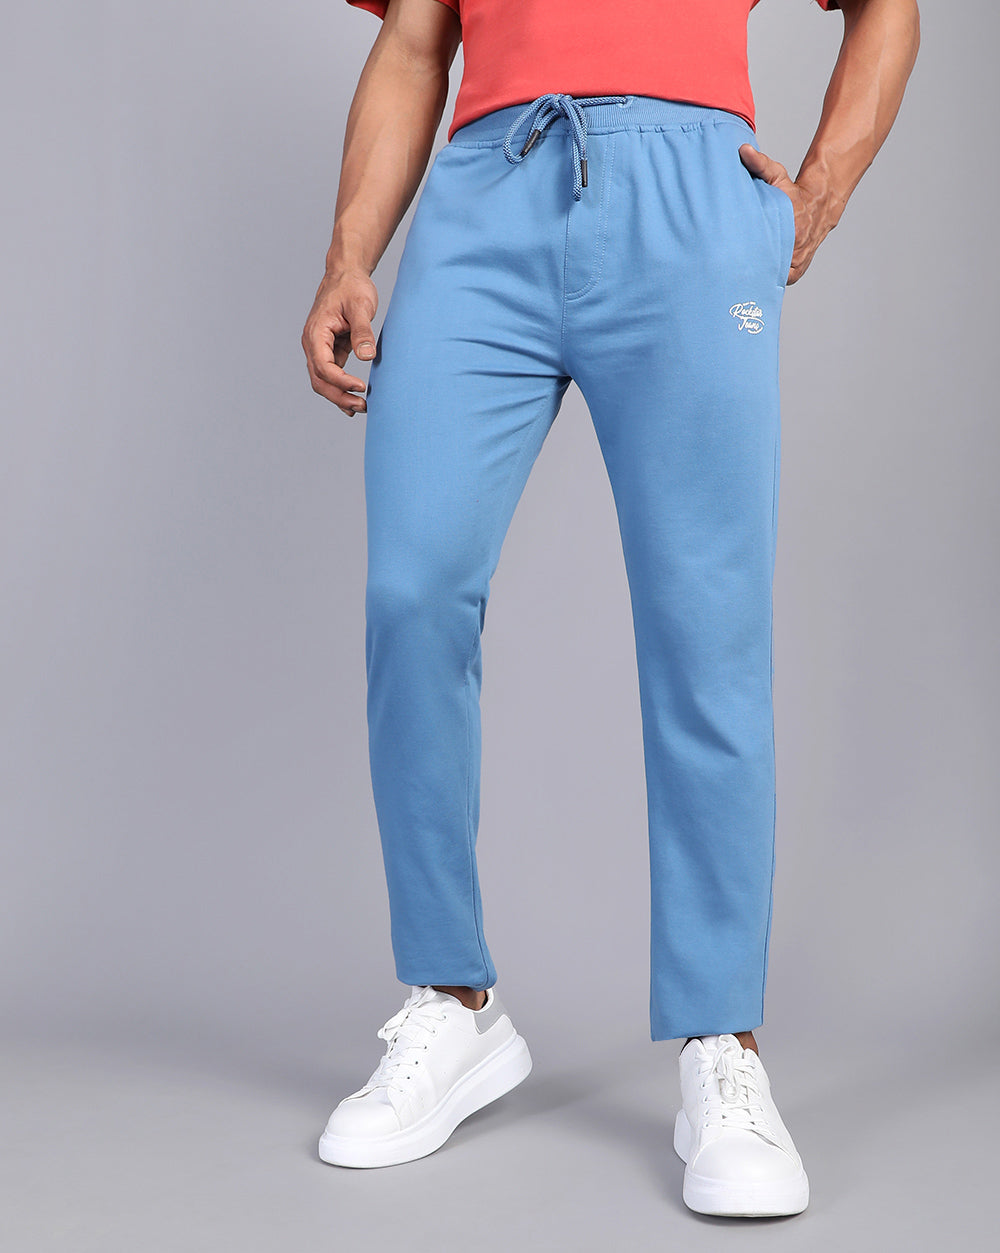 Buy Navy blue  White Track Pants for Men by Incite Online  Ajiocom